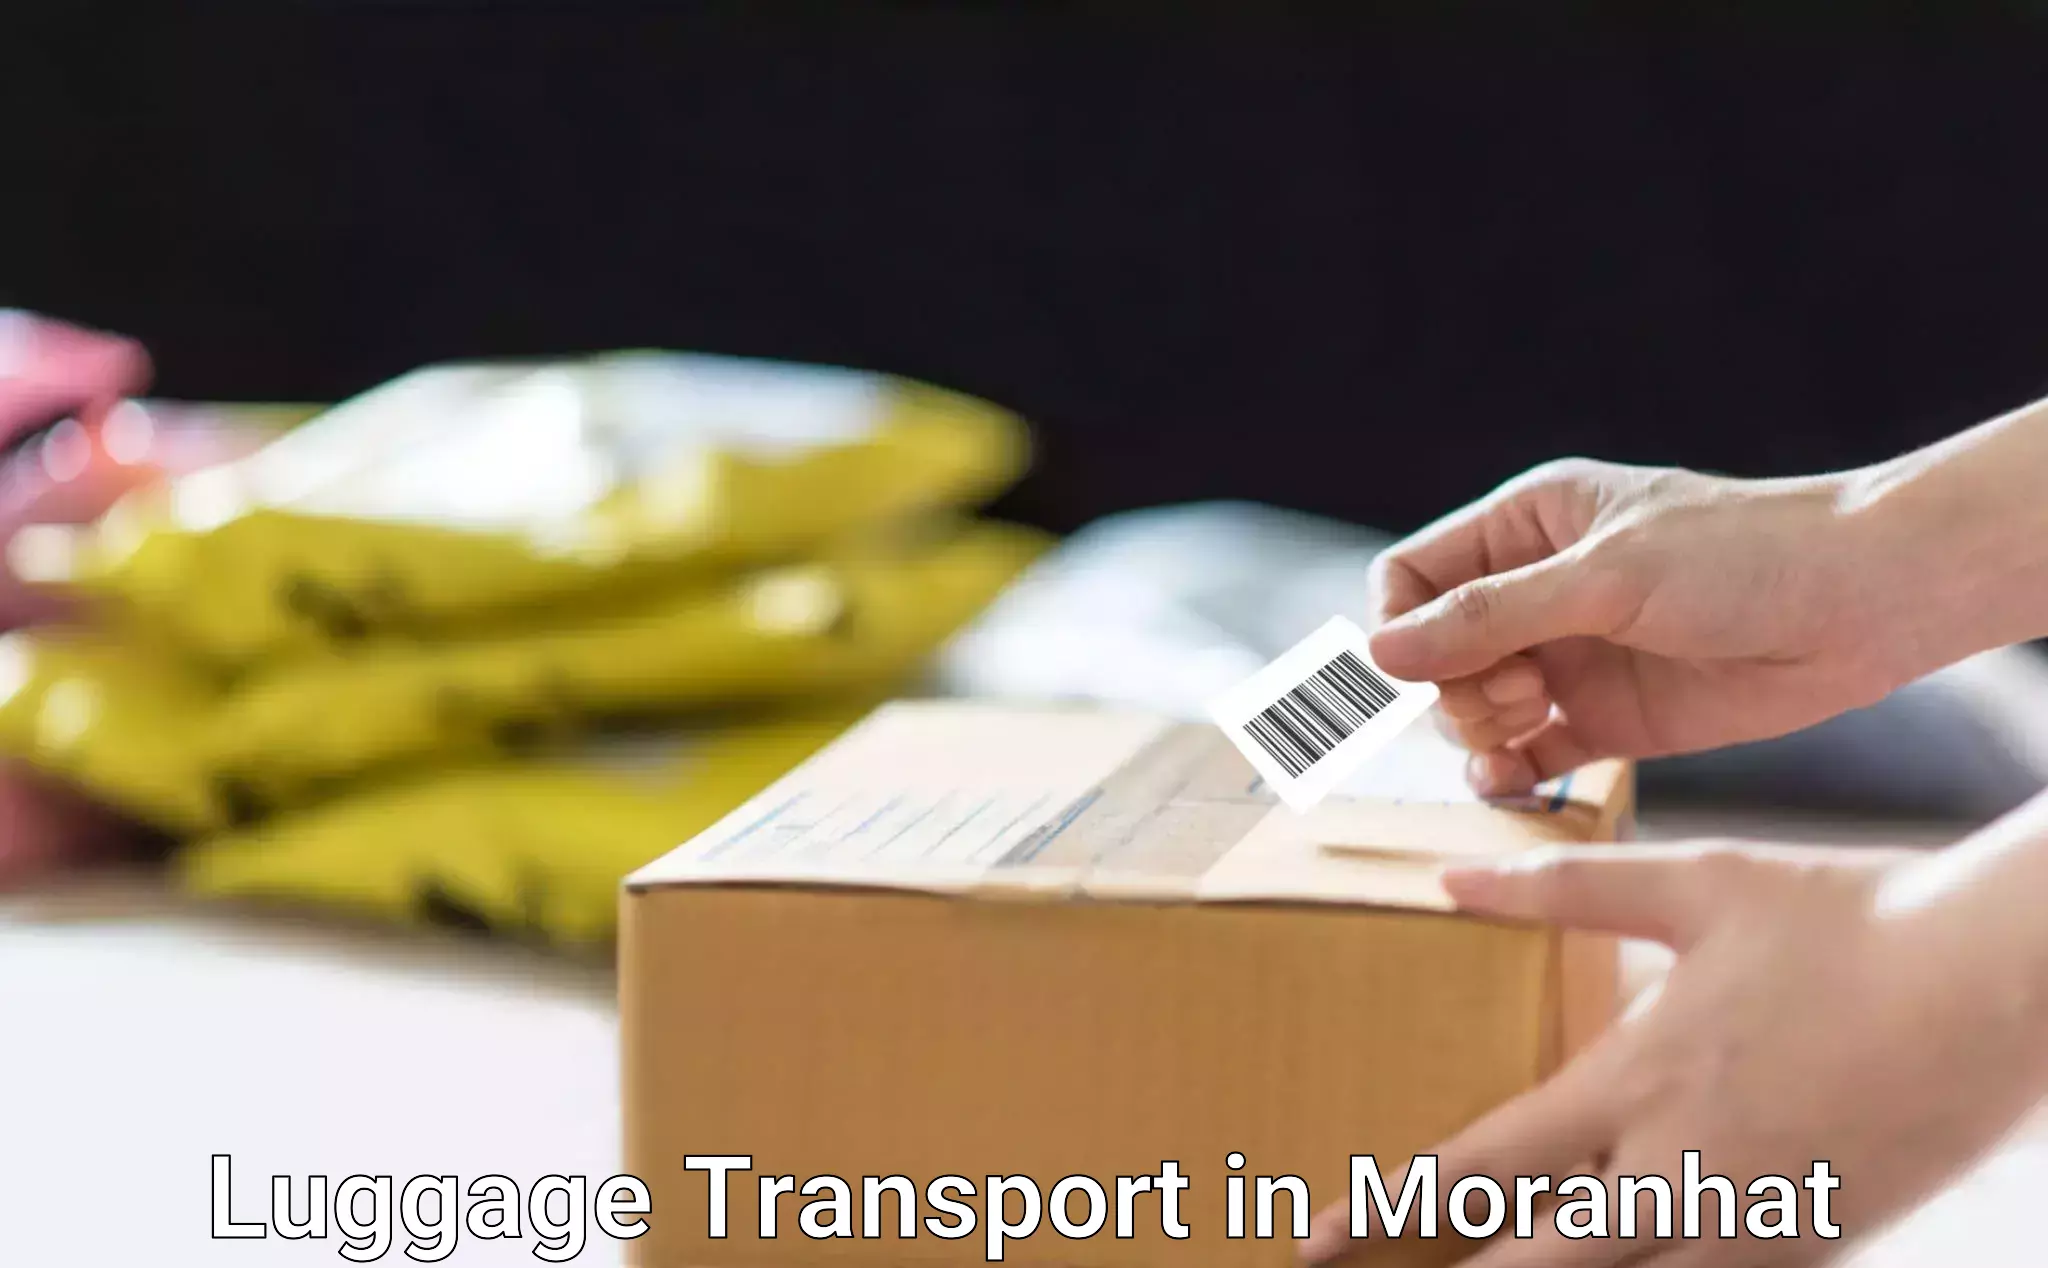 Luggage transport pricing in Moranhat